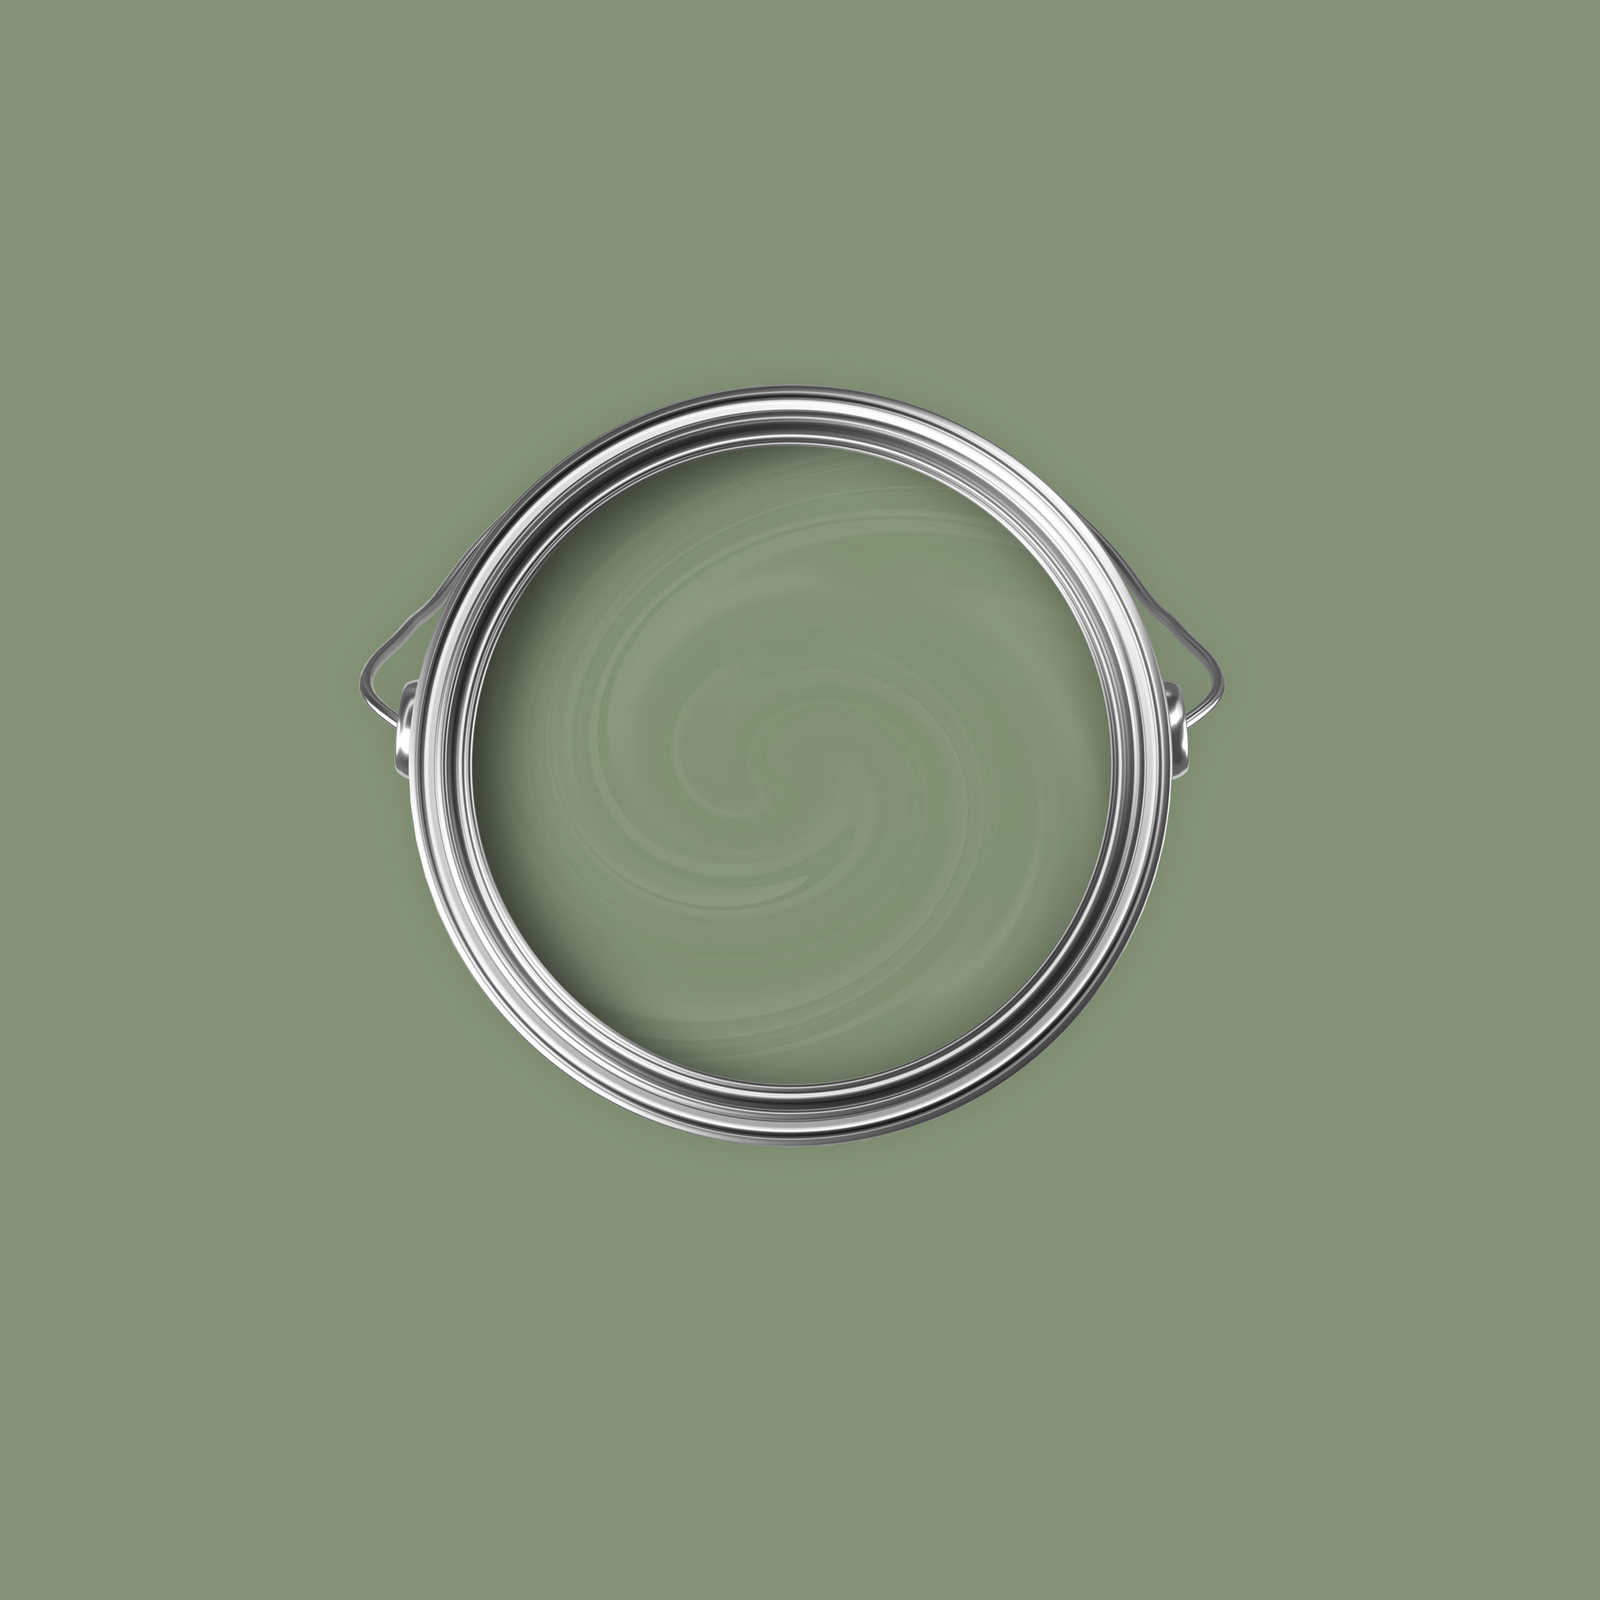             Pintura mural Premium verde oliva natural »Gorgeous Green« NW503 – 2,5 litro
        